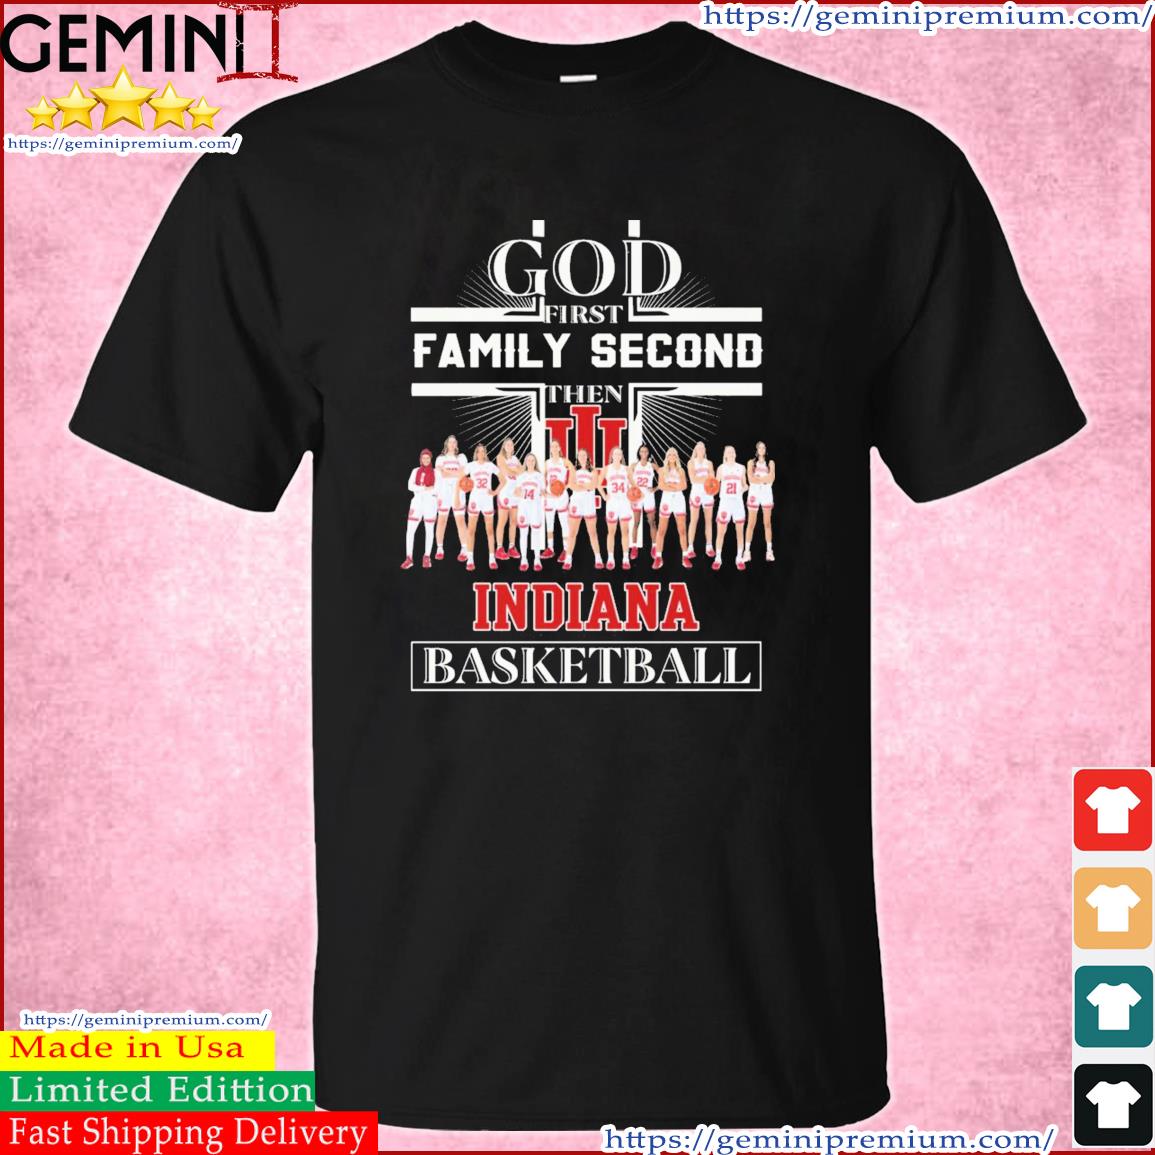 God First Family Second Then Indiana Women's Basketball Team Shirt